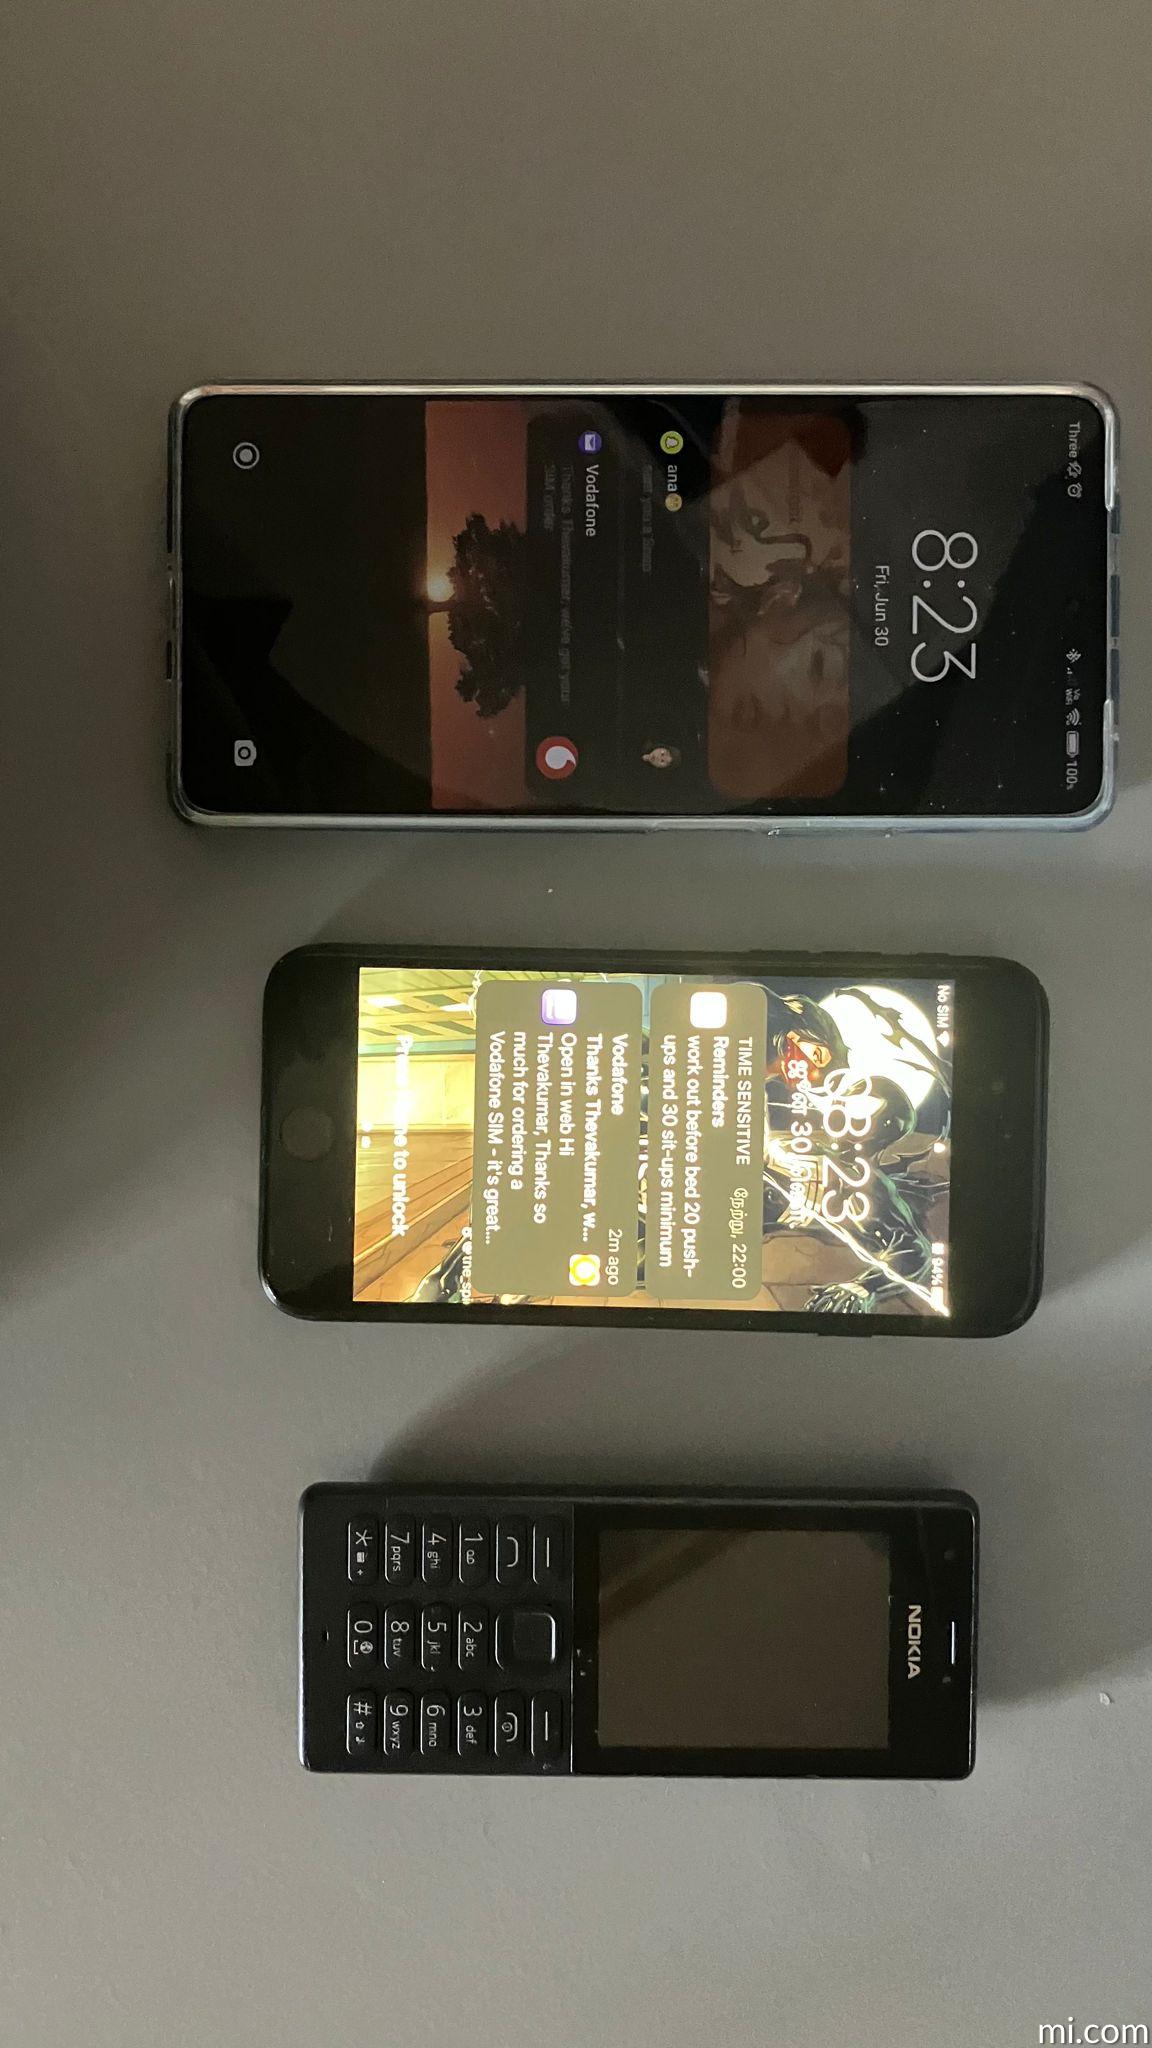 Xiaomi Poco F5 - Full phone specifications